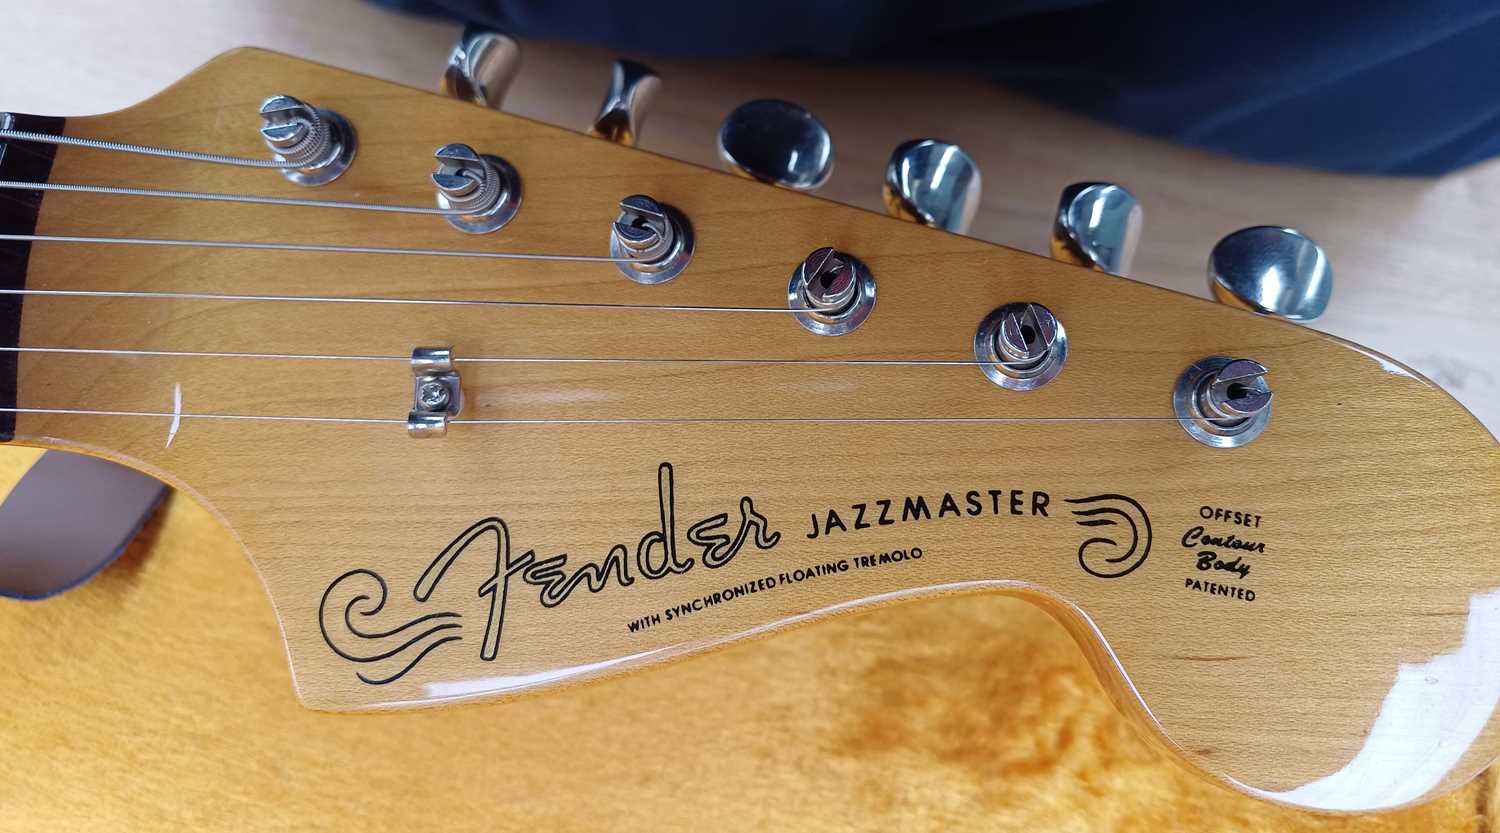 Fender Jazzmaster Electric Guitar - Image 2 of 8